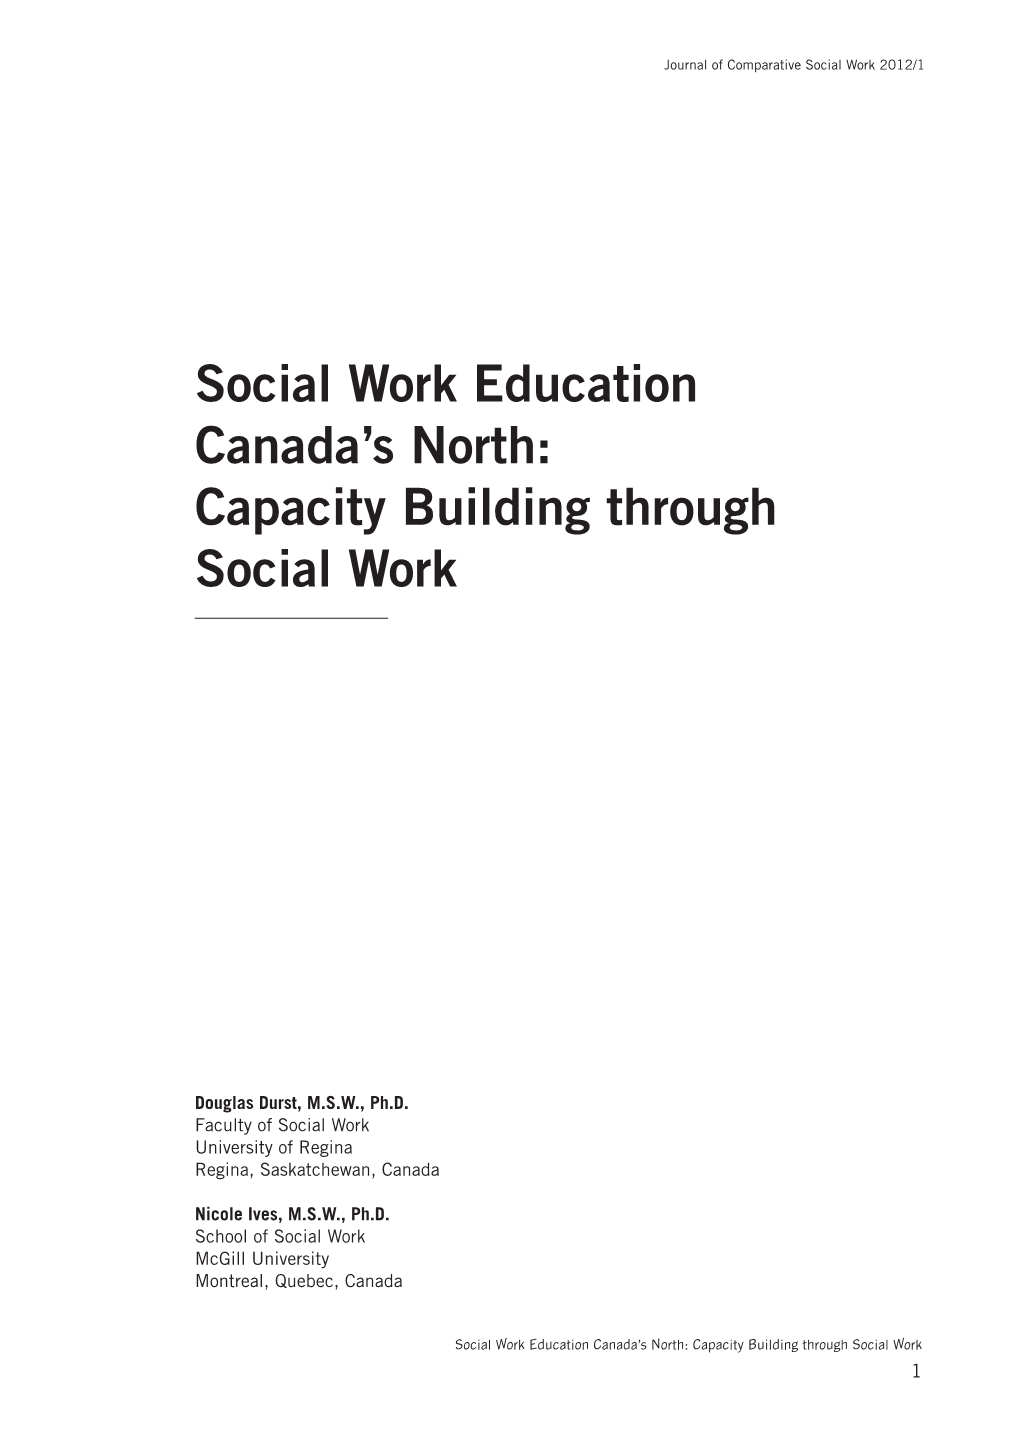 Capacity Building Through Social Work